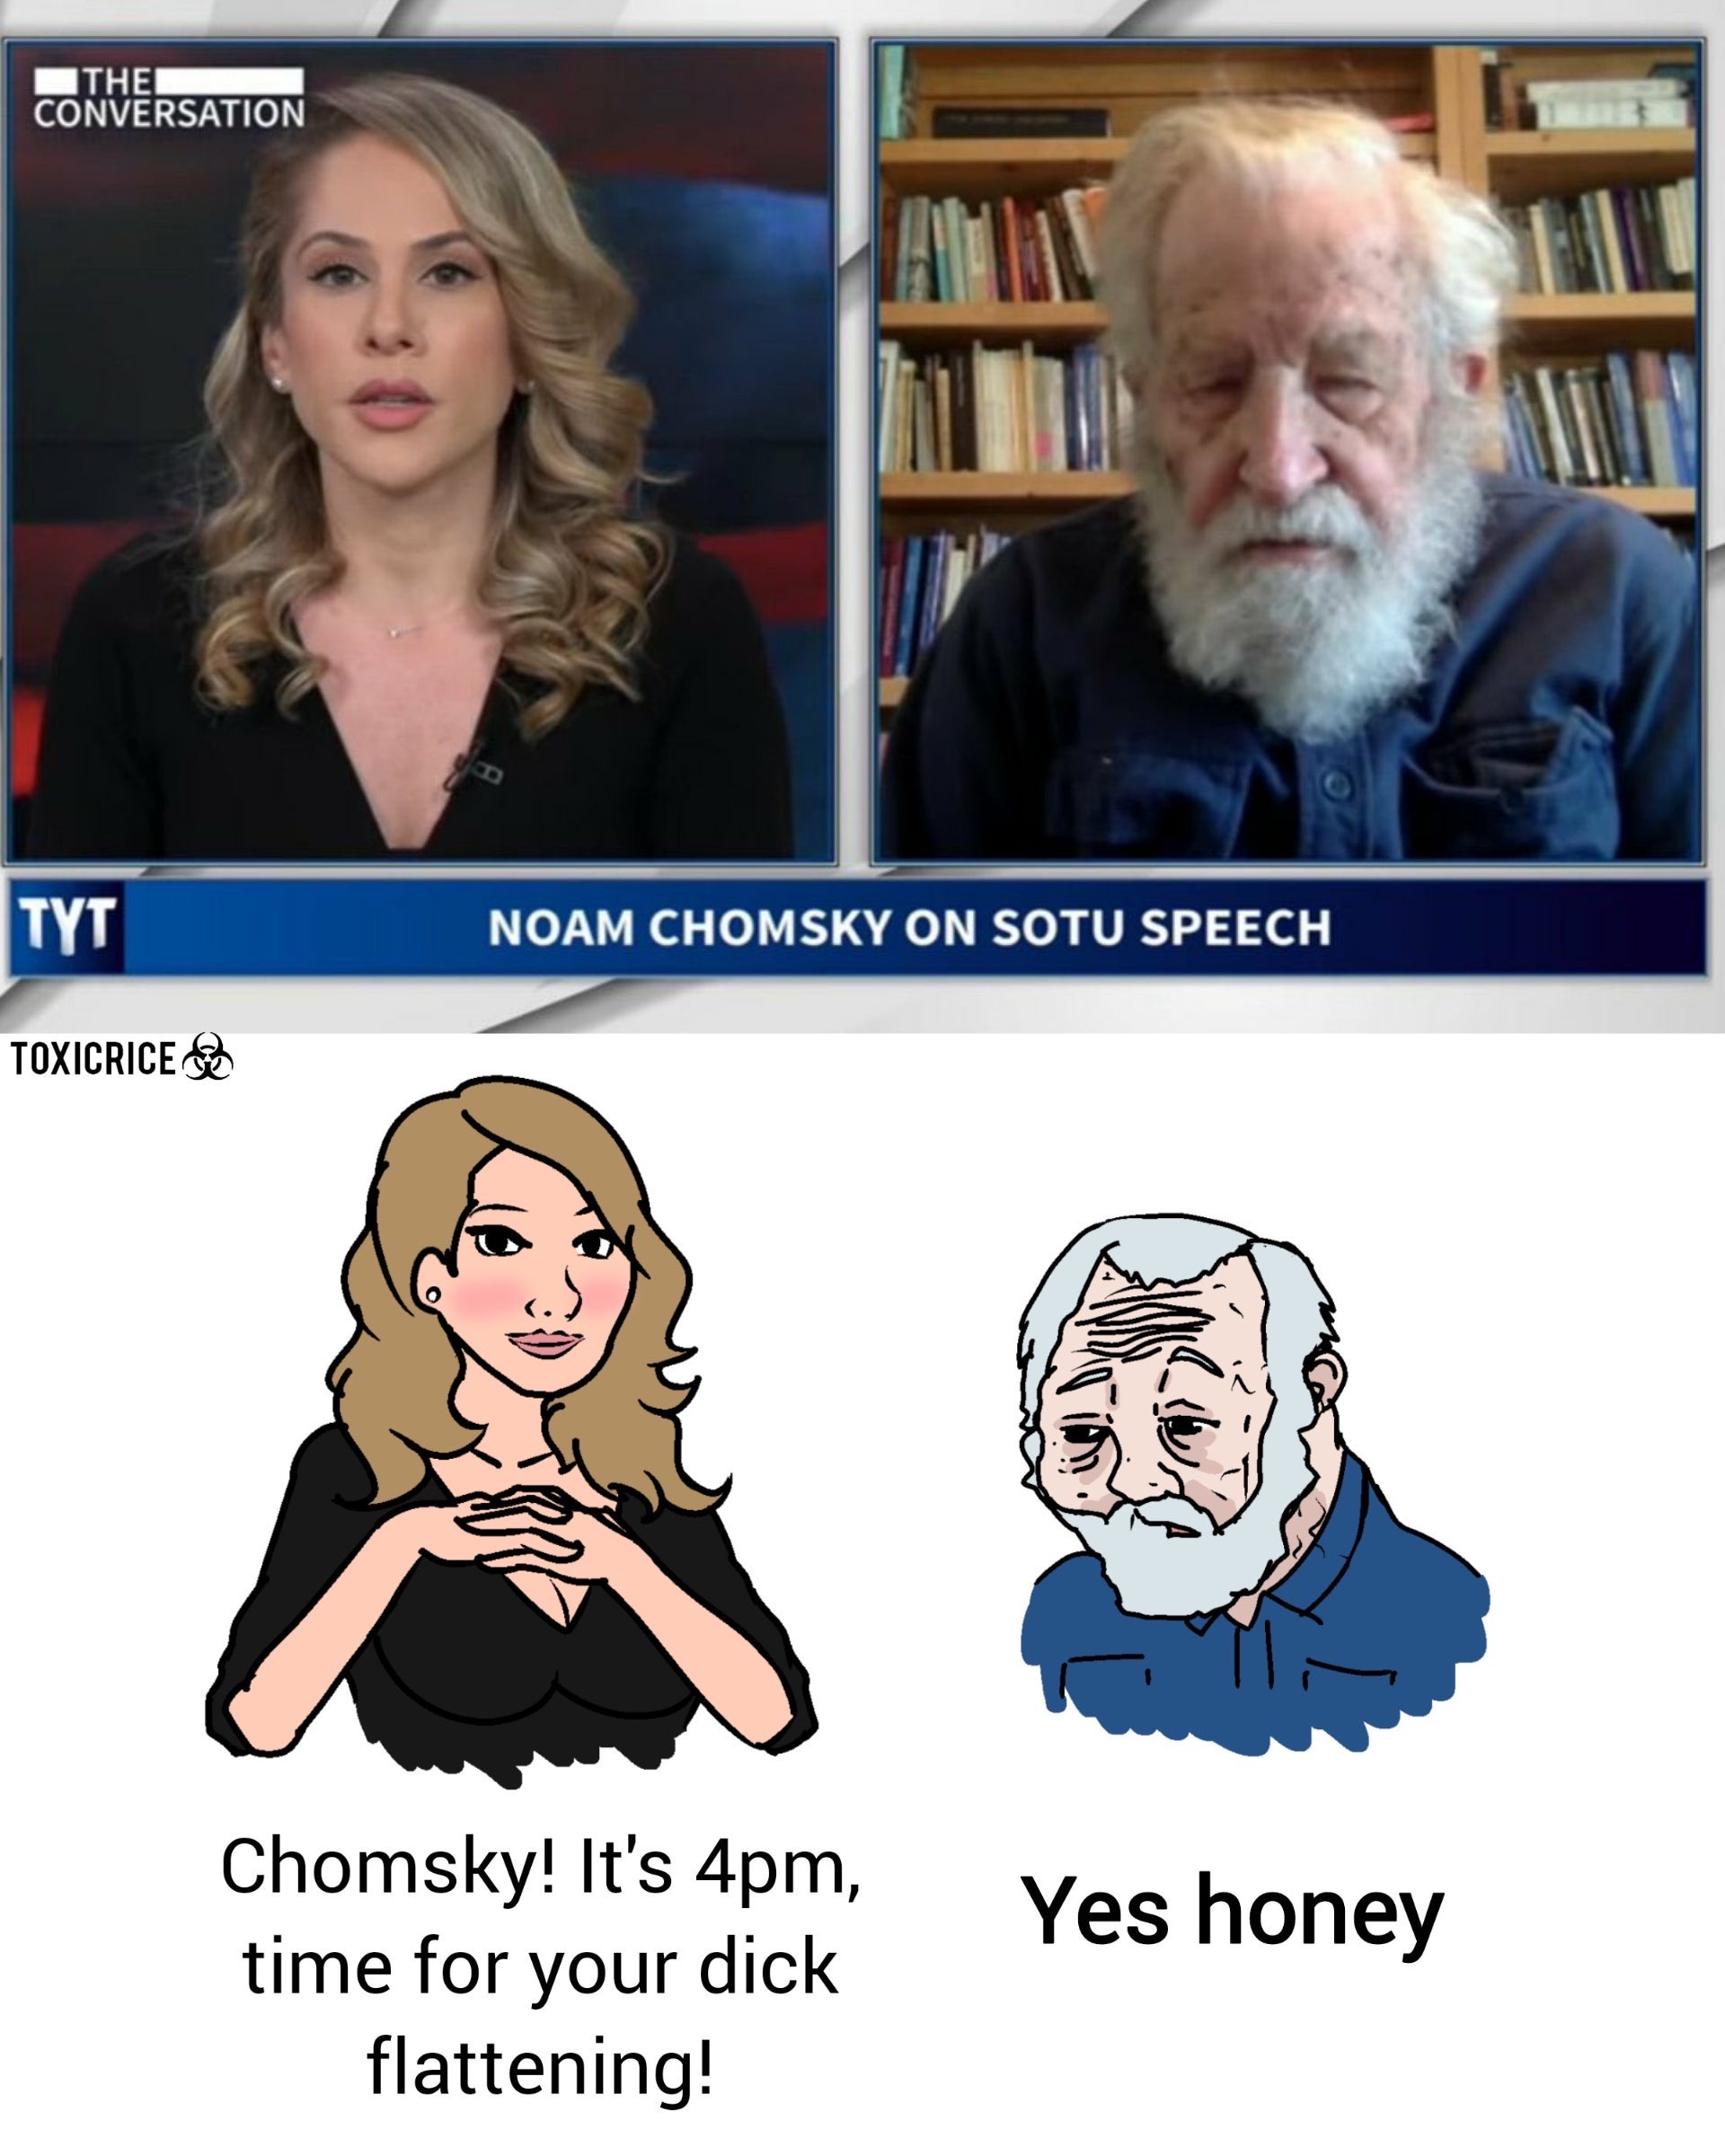 noam chomsky dick flattening - Ithei Conversation Tyt Noam Chomsky On Sotu Speech Toxicrices Yes honey Chomsky! It's 4pm, time for your dick flattening!